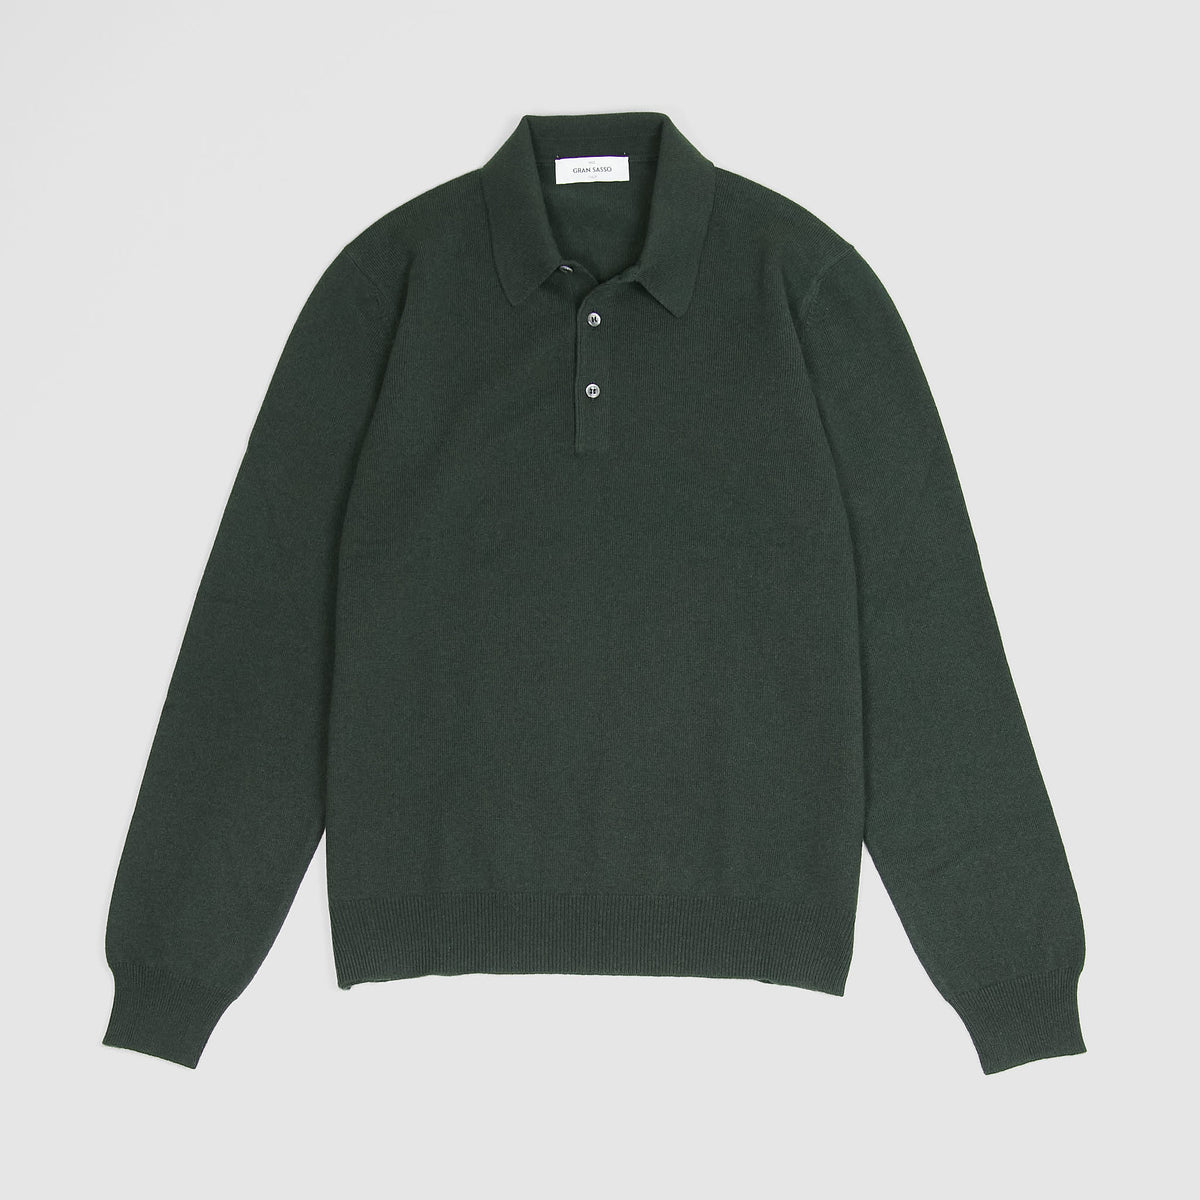 Gran Sasso Wool/ Cashmere  Long Sleeve Polo Shirt